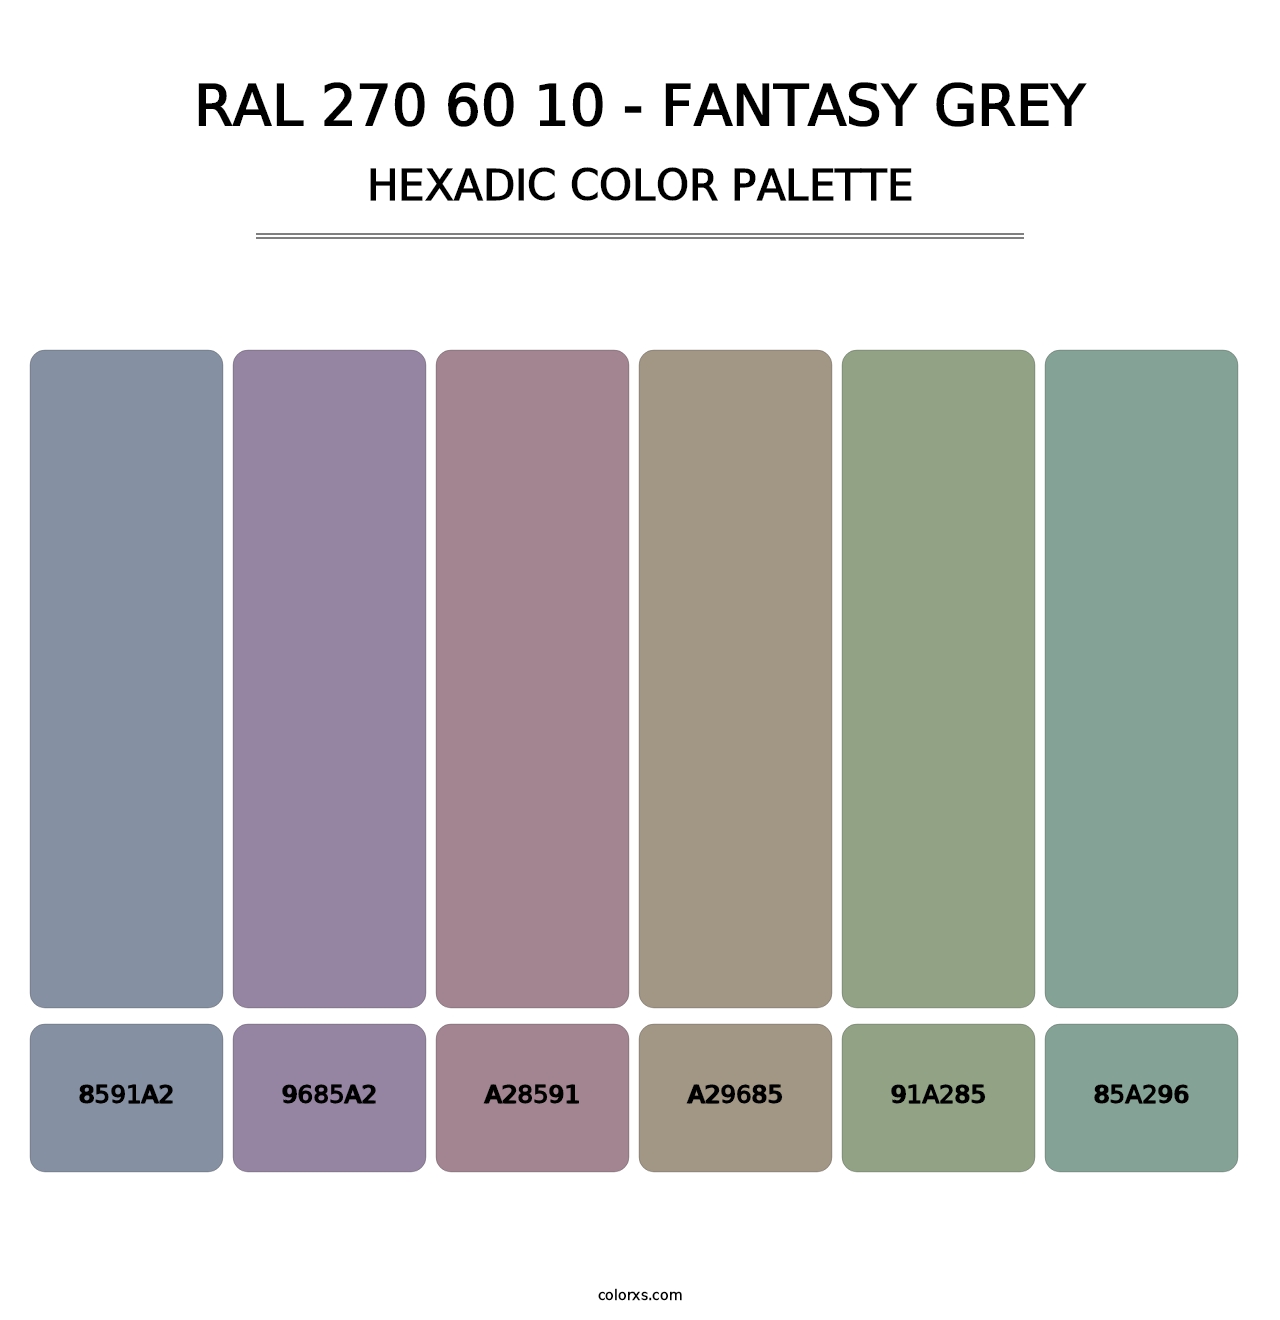 RAL 270 60 10 - Fantasy Grey - Hexadic Color Palette